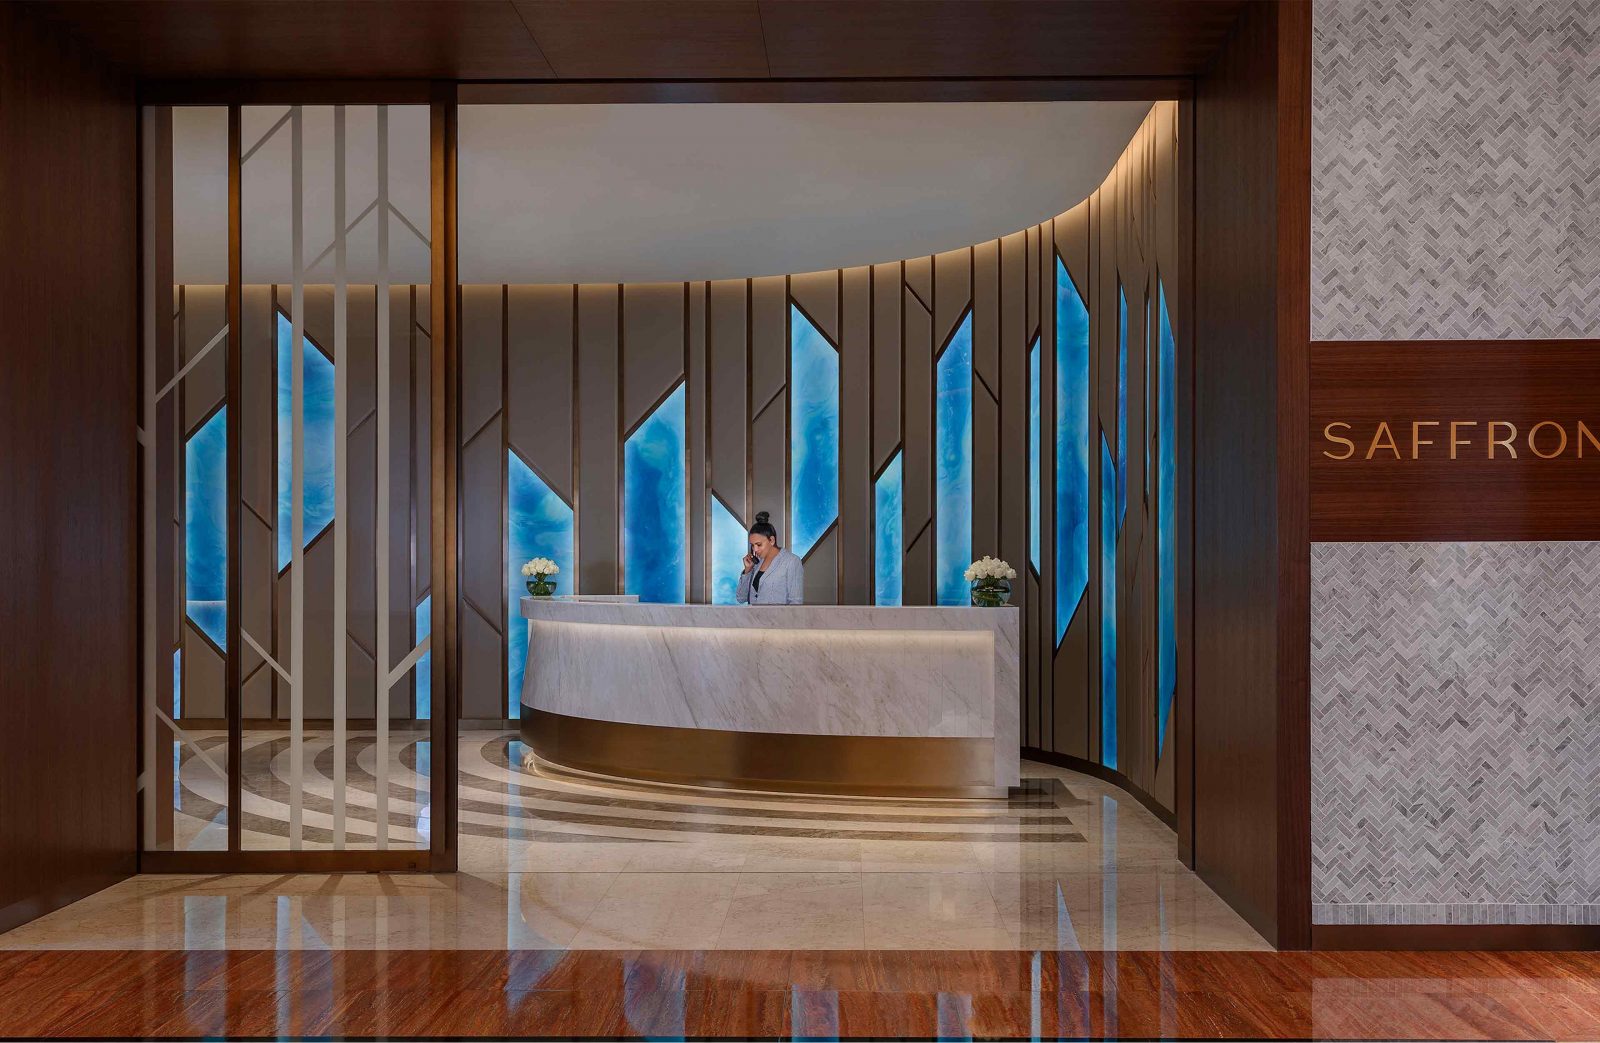 Architectural Lighting Design Restaurant Reception Desk Bold Blue Feature Backdrop Saffron Buffet Atlantis Dubai Studio N